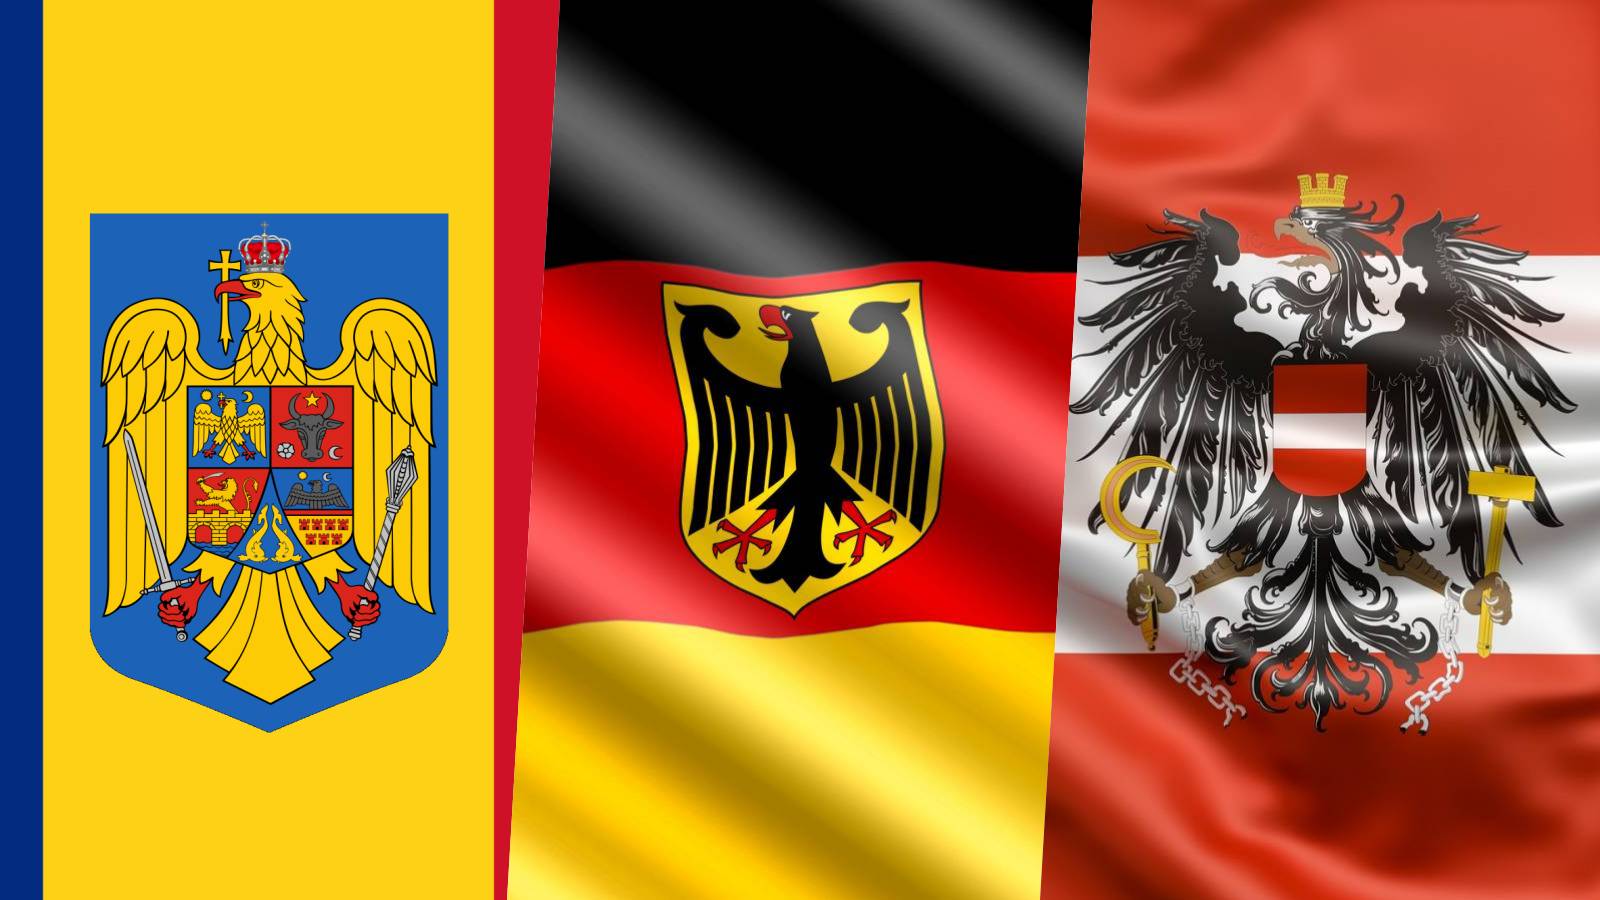 Austria Decizia ISTORICA Anuntata Germania Hotarari ULTIMA ORA Schengen Romania